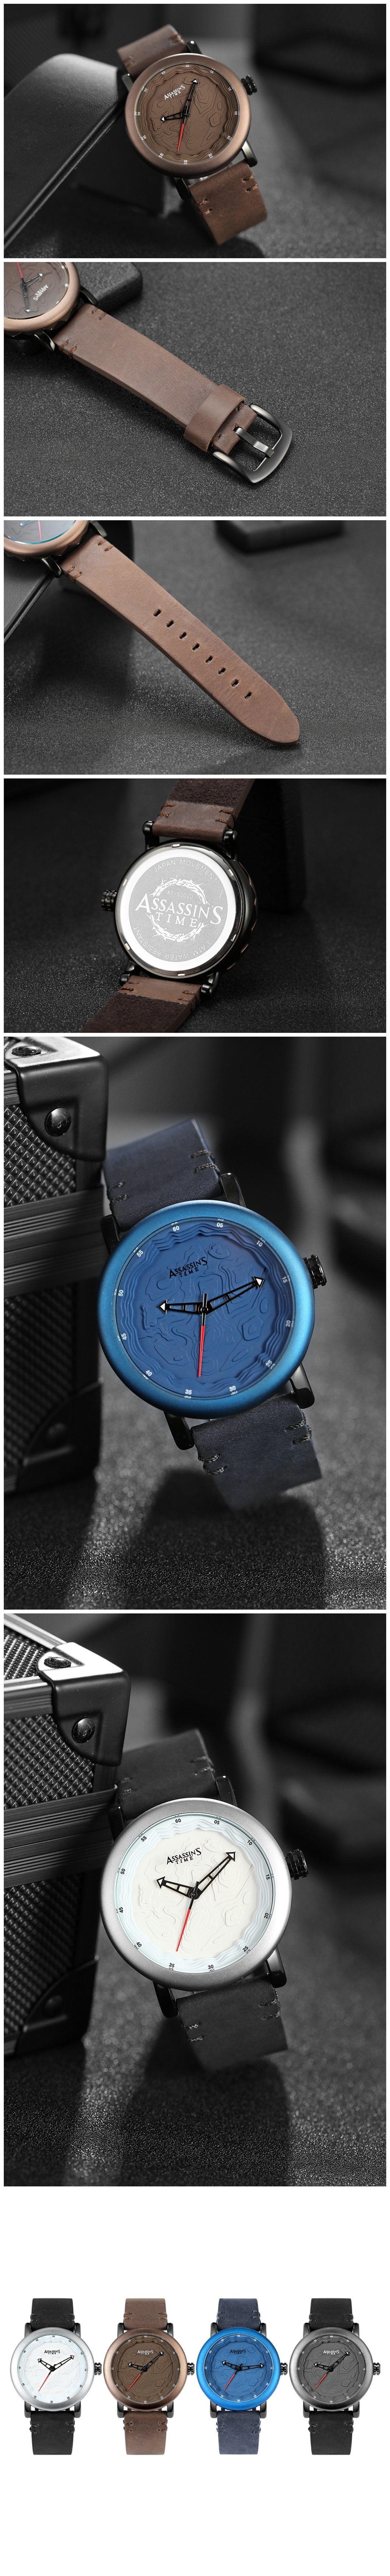 Assasin's Time Watch Fashion Brass Casual Decent Sport Watch for Men